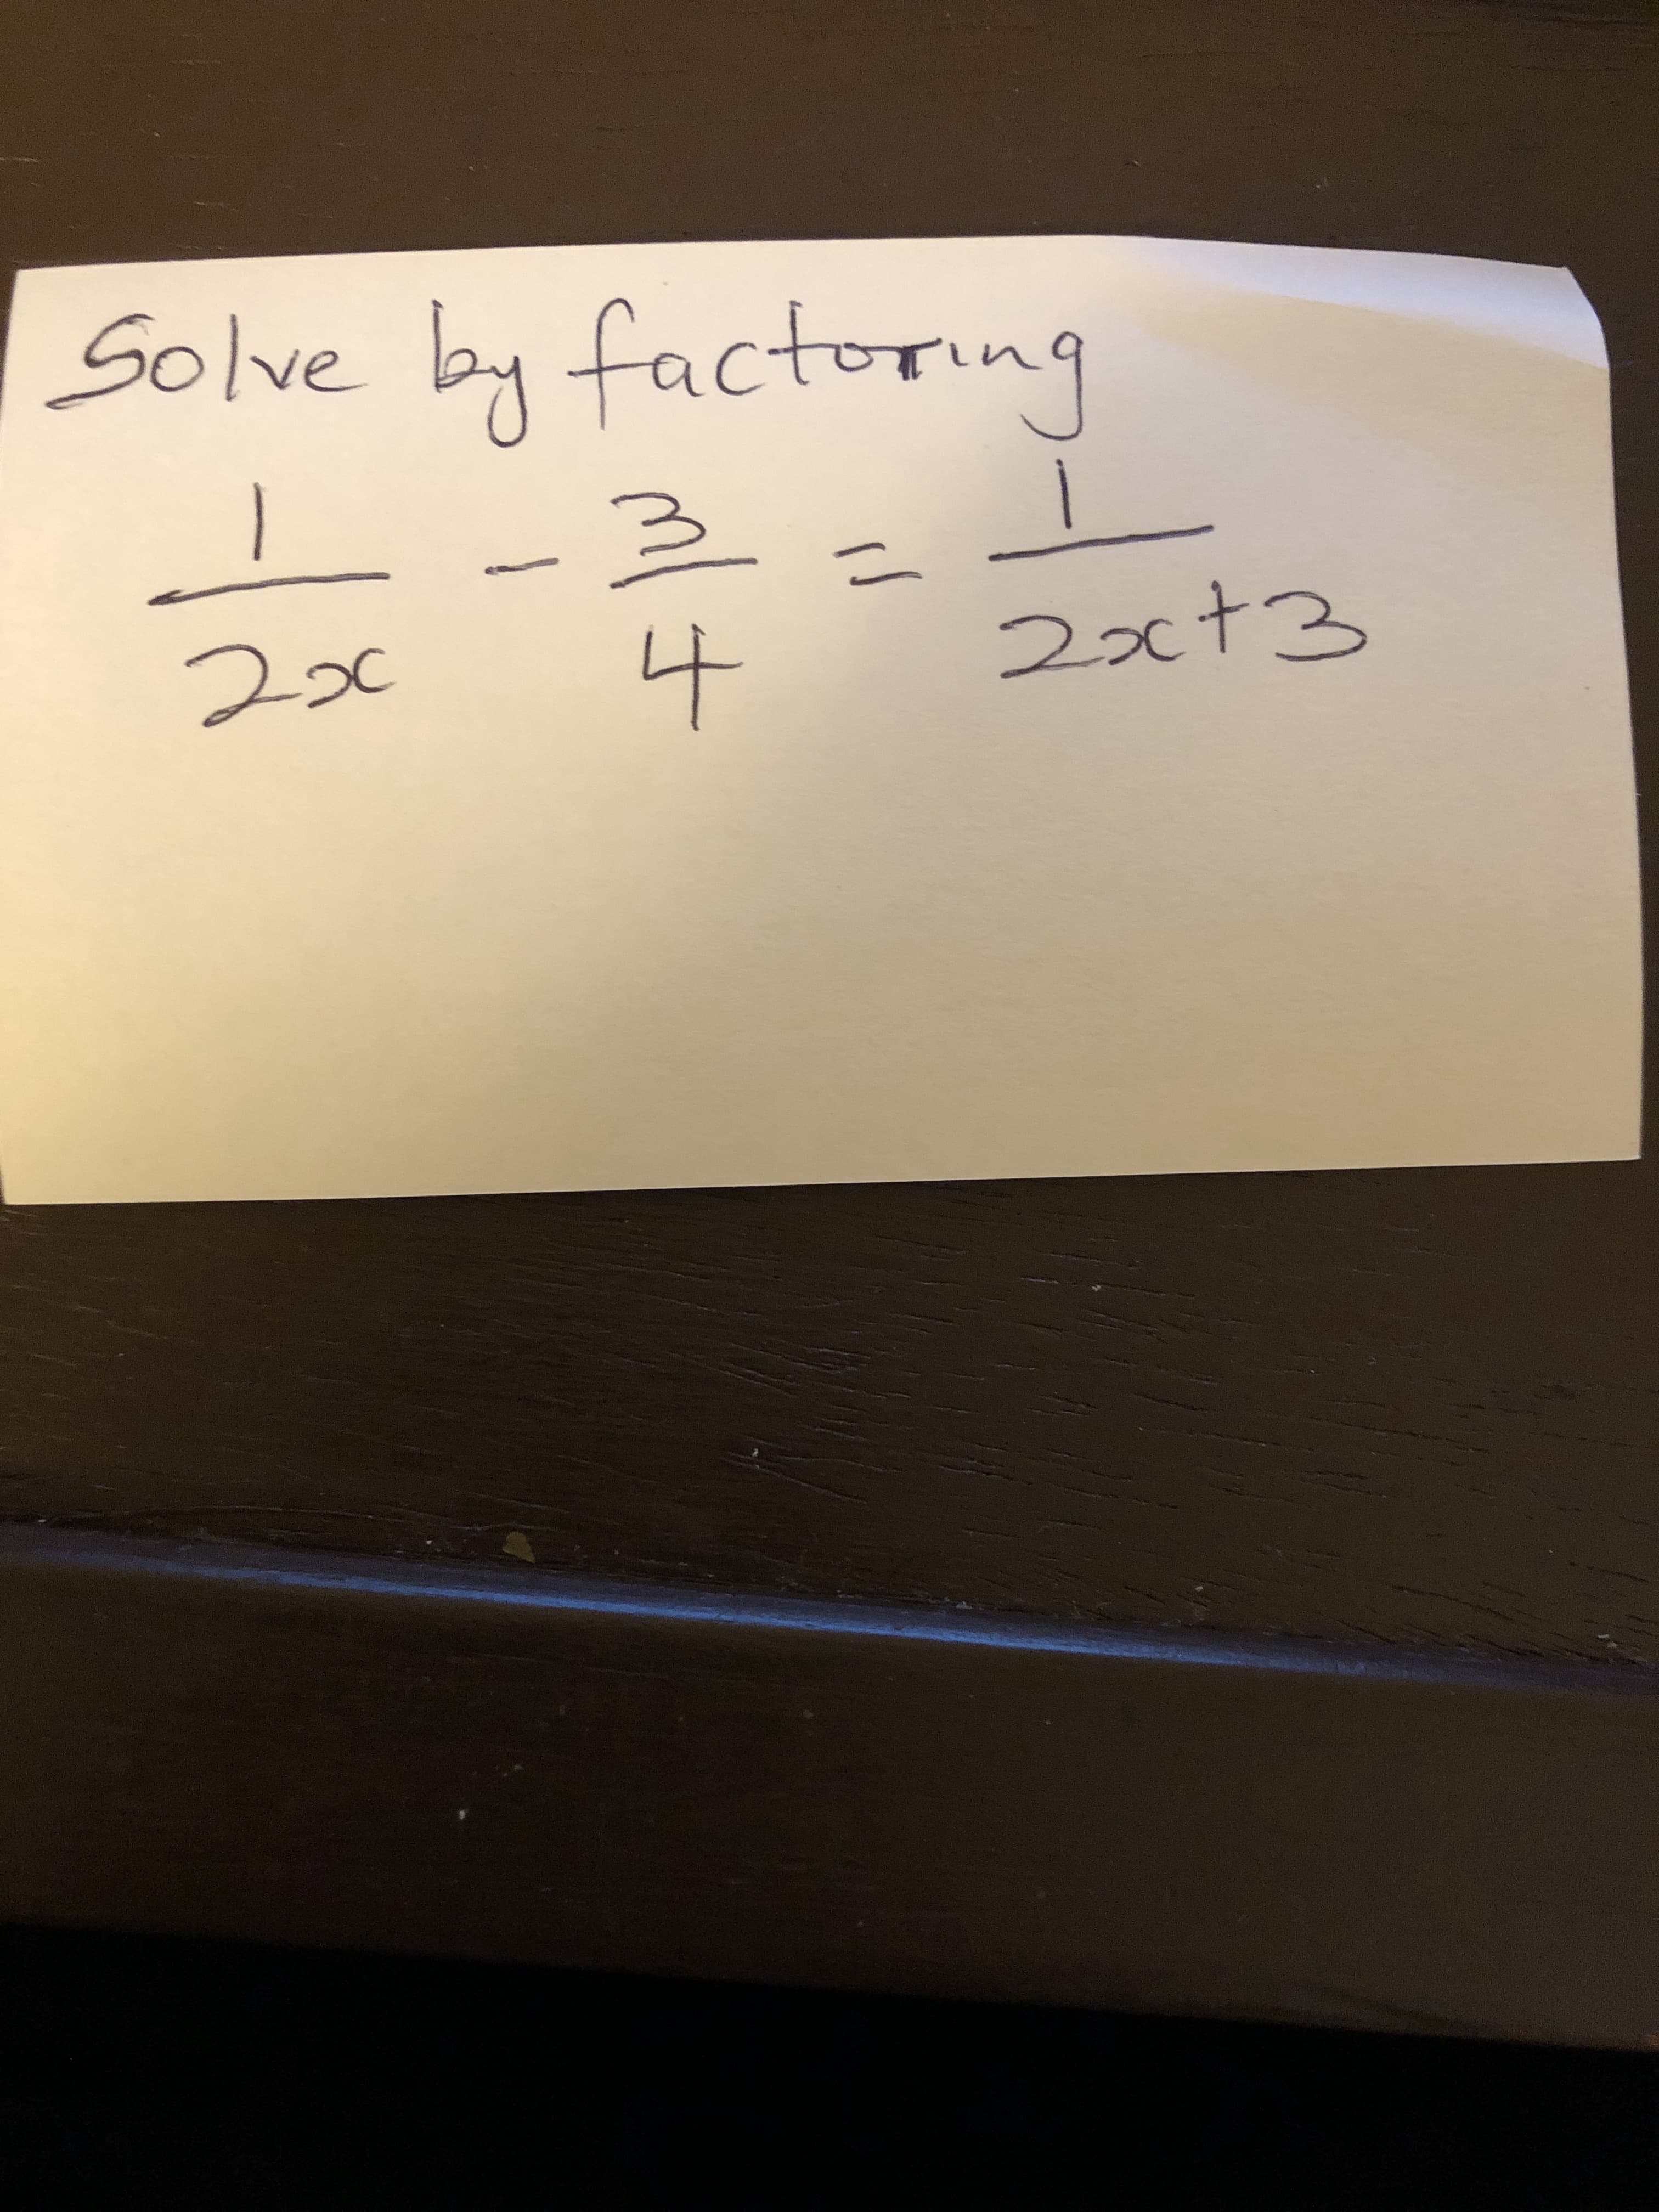 Solve by factoring
%3D
4
2xt3
